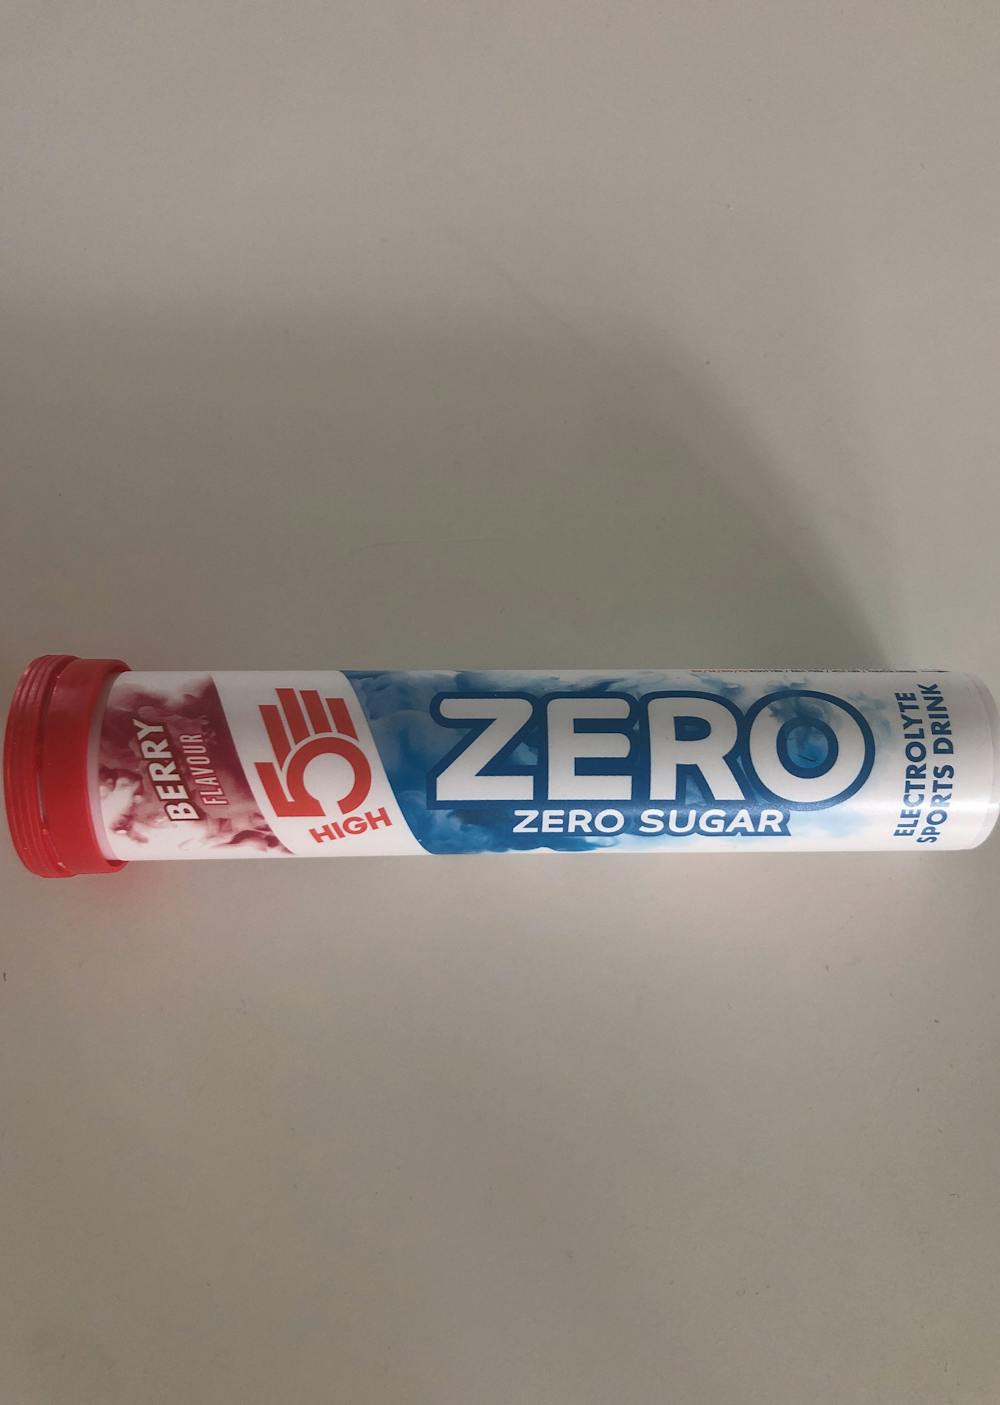 Zero, High 5